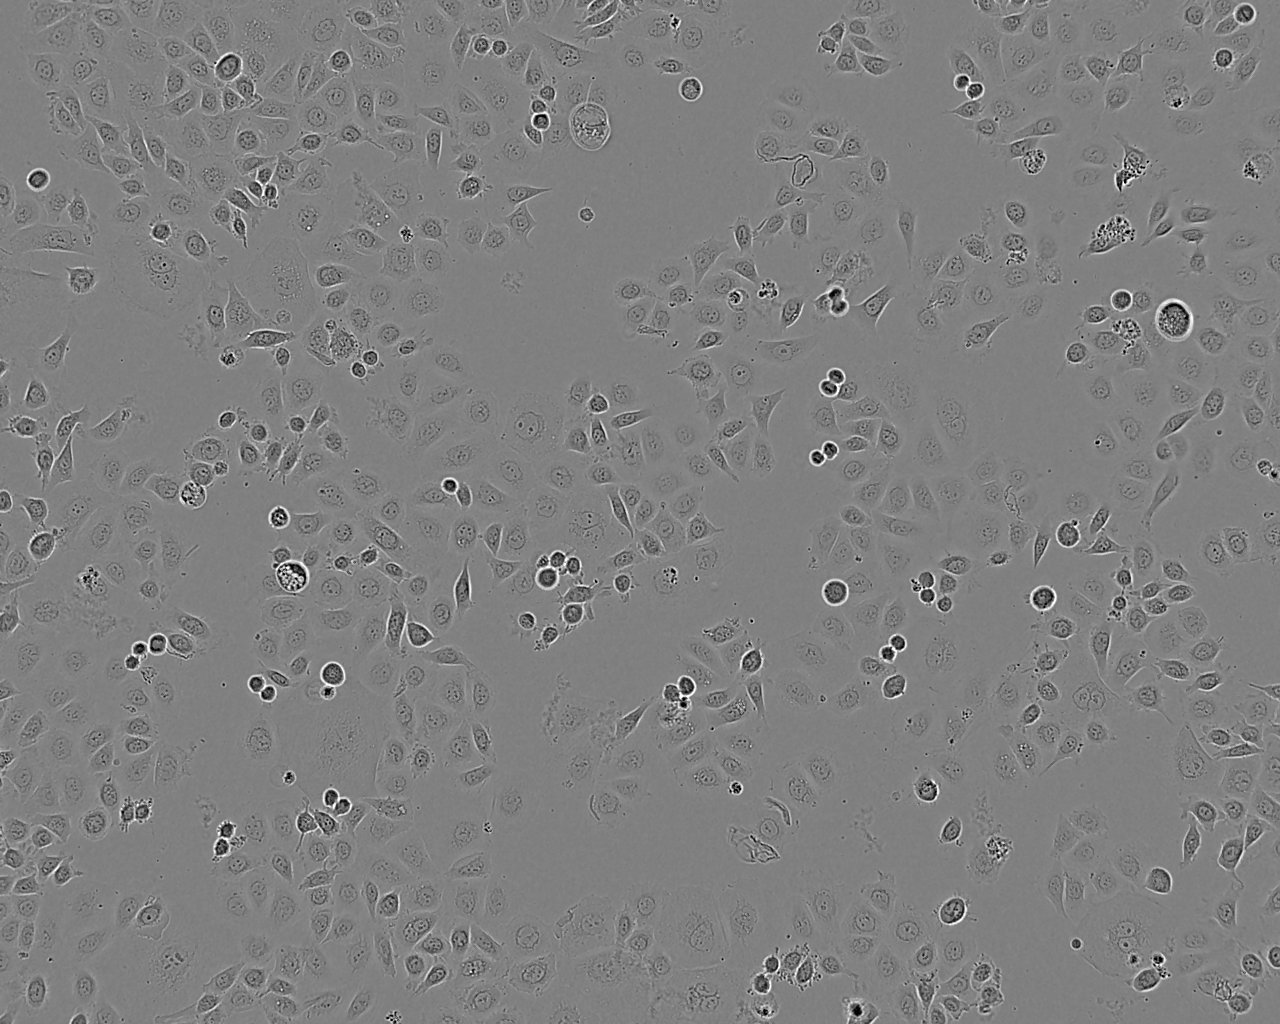 SUIT-2 epithelioid cells人胰腺癌细胞系,SUIT-2 epithelioid cells